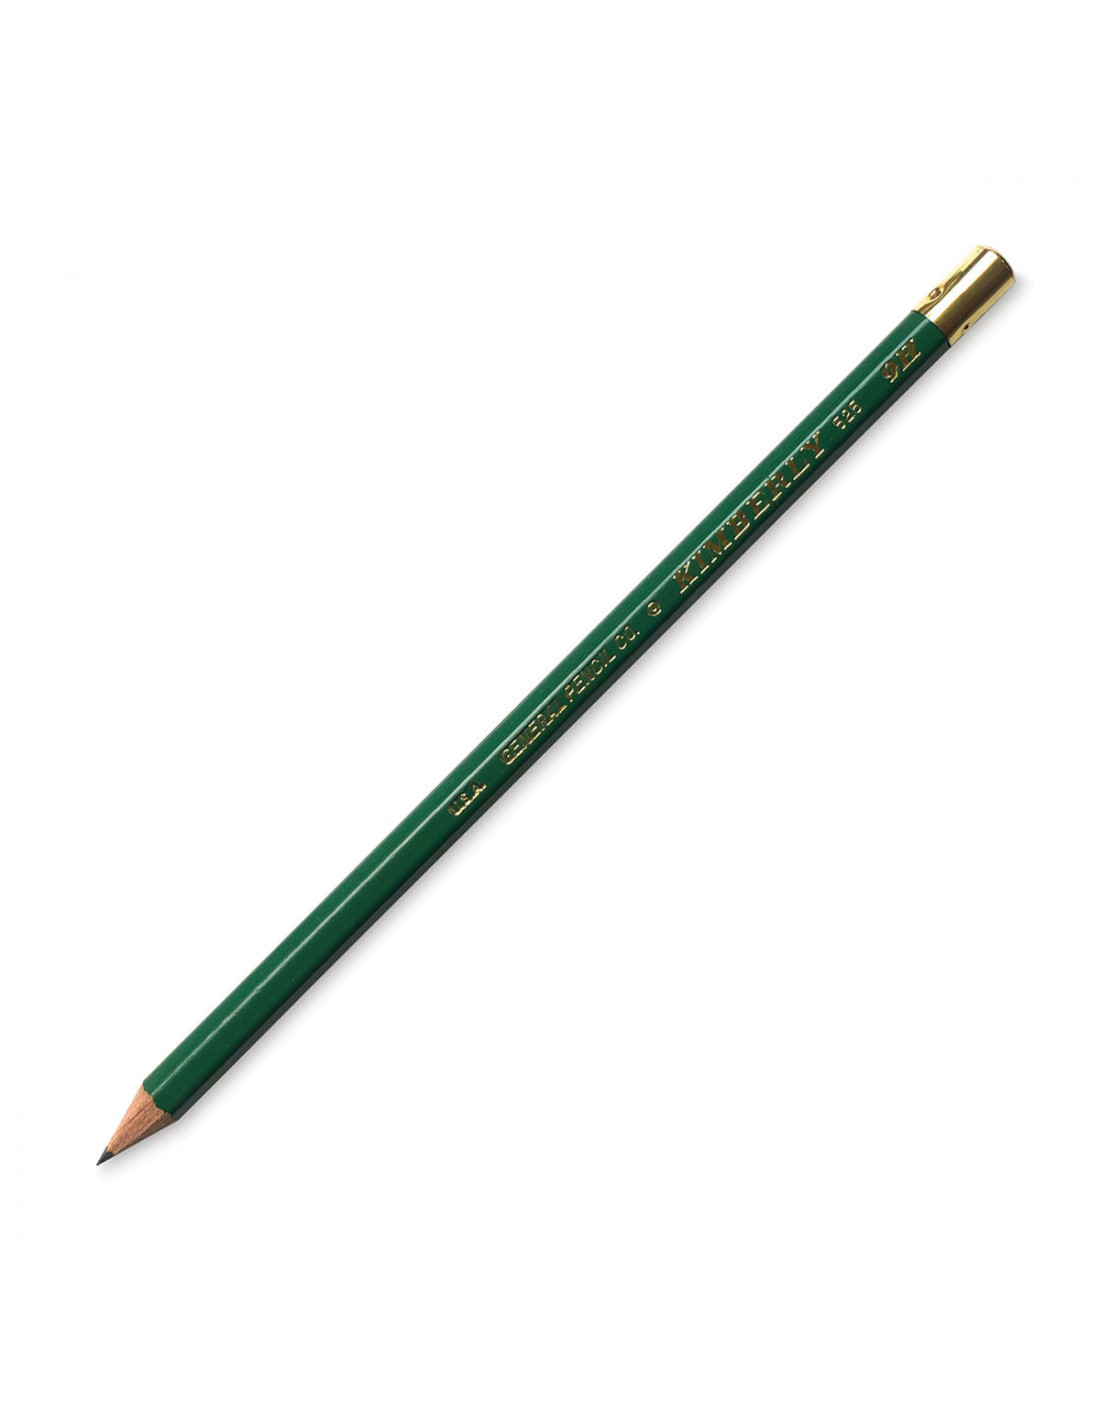 9H Graphite Pencil - Kimberly 525 - General Pencil Company